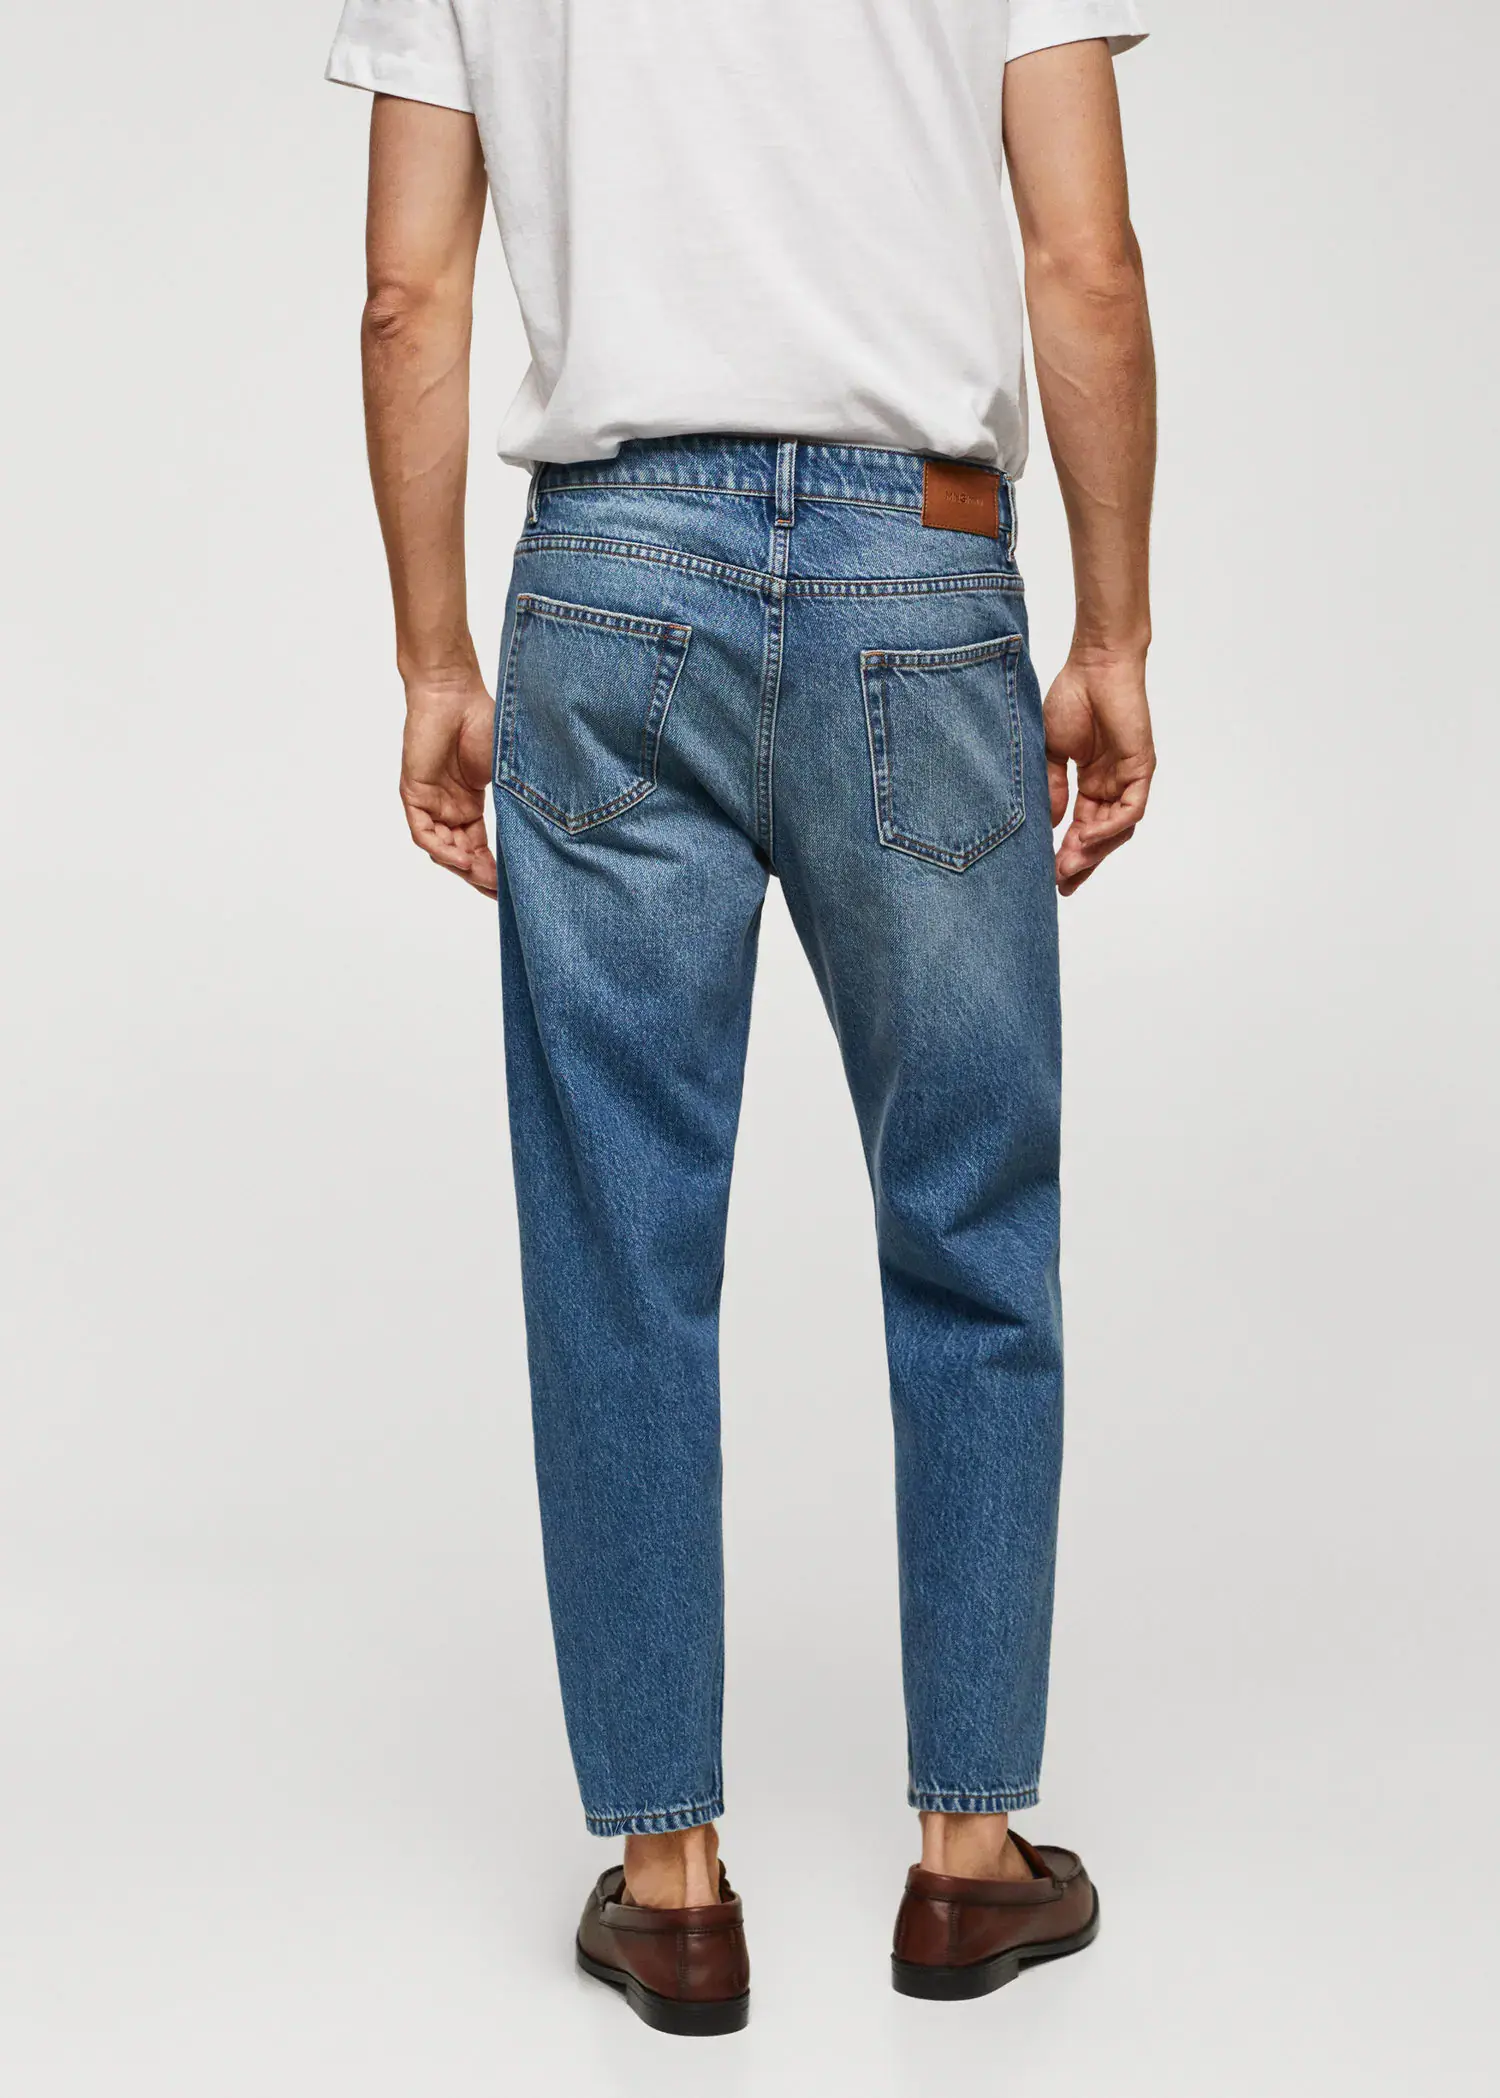 Mango Jeans tapered-fit lavaggio medio. 3